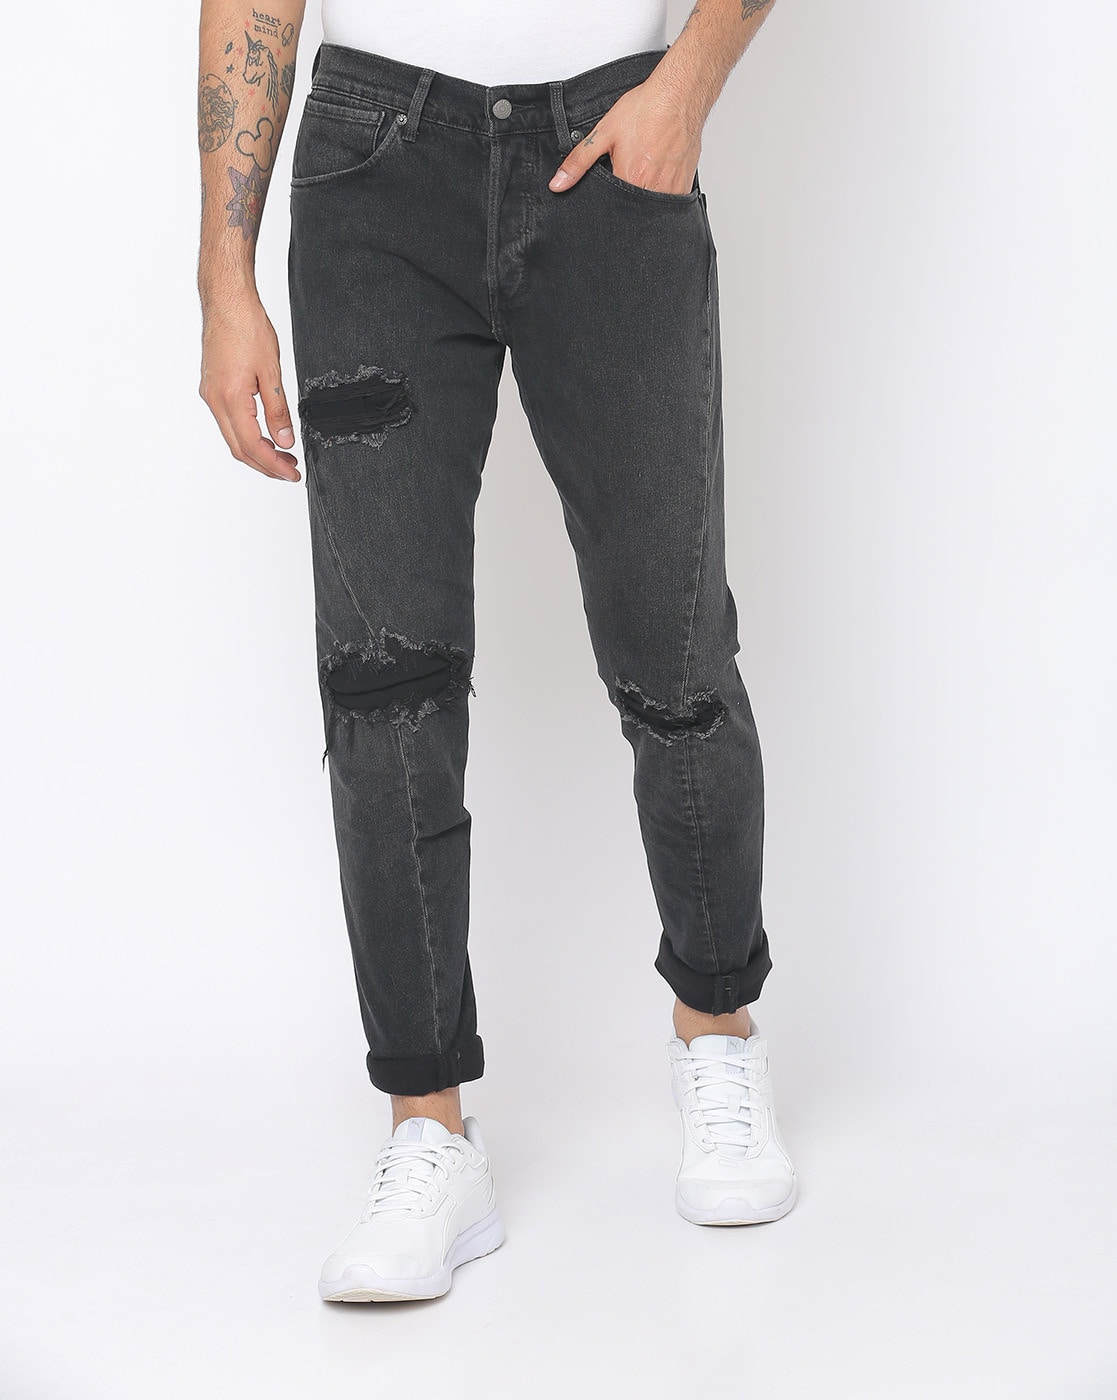 Buy Black Jeans for Men by LEVIS Online 